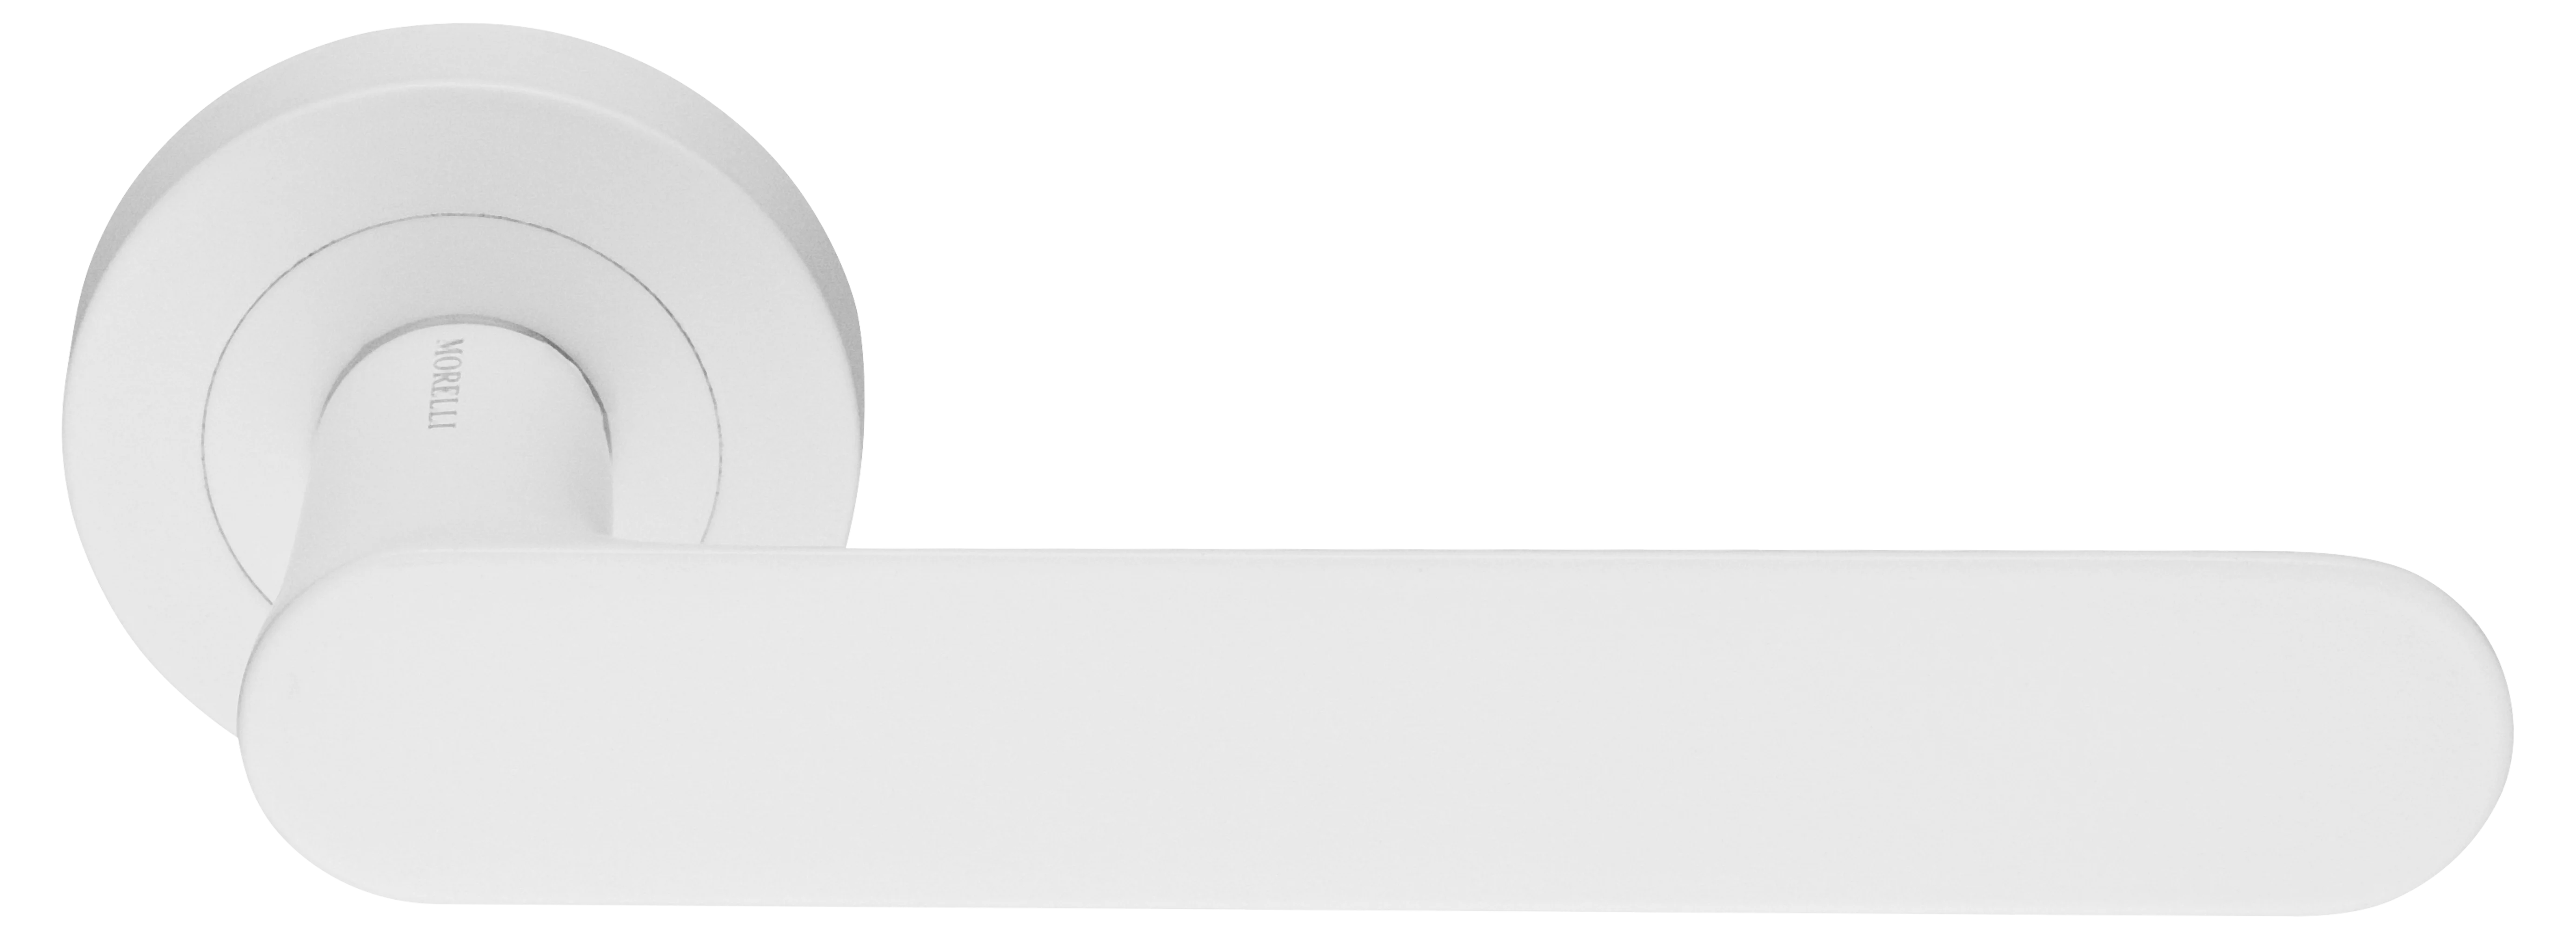 LE BOAT R2 BIA, ручка дверная, цвет - белый фото купить Краснодар